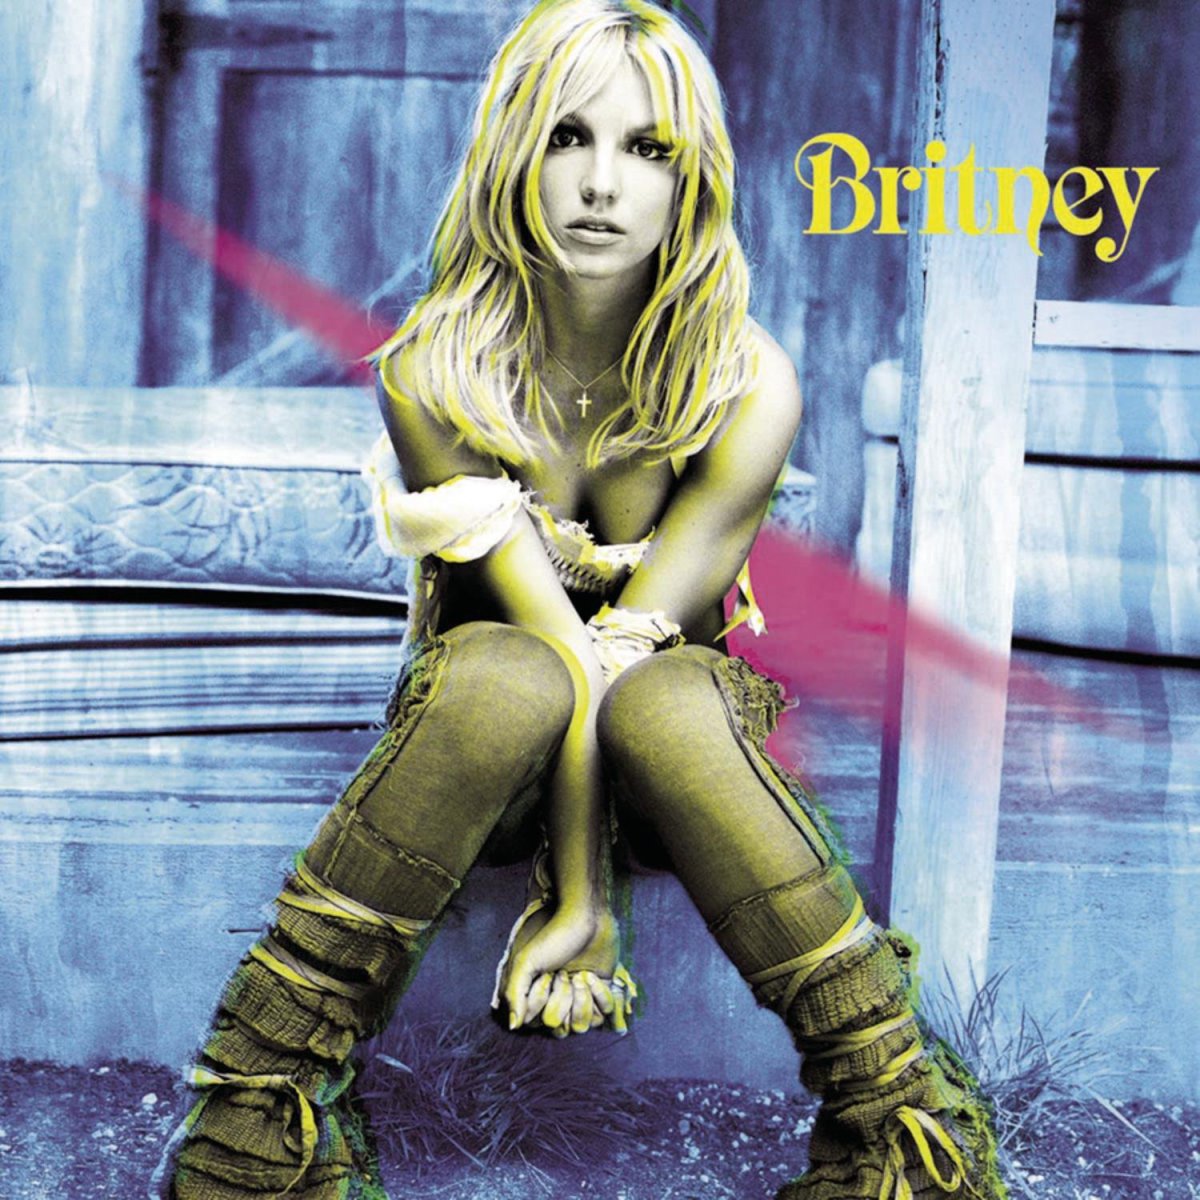 ‘Britney’ – Britney Spears